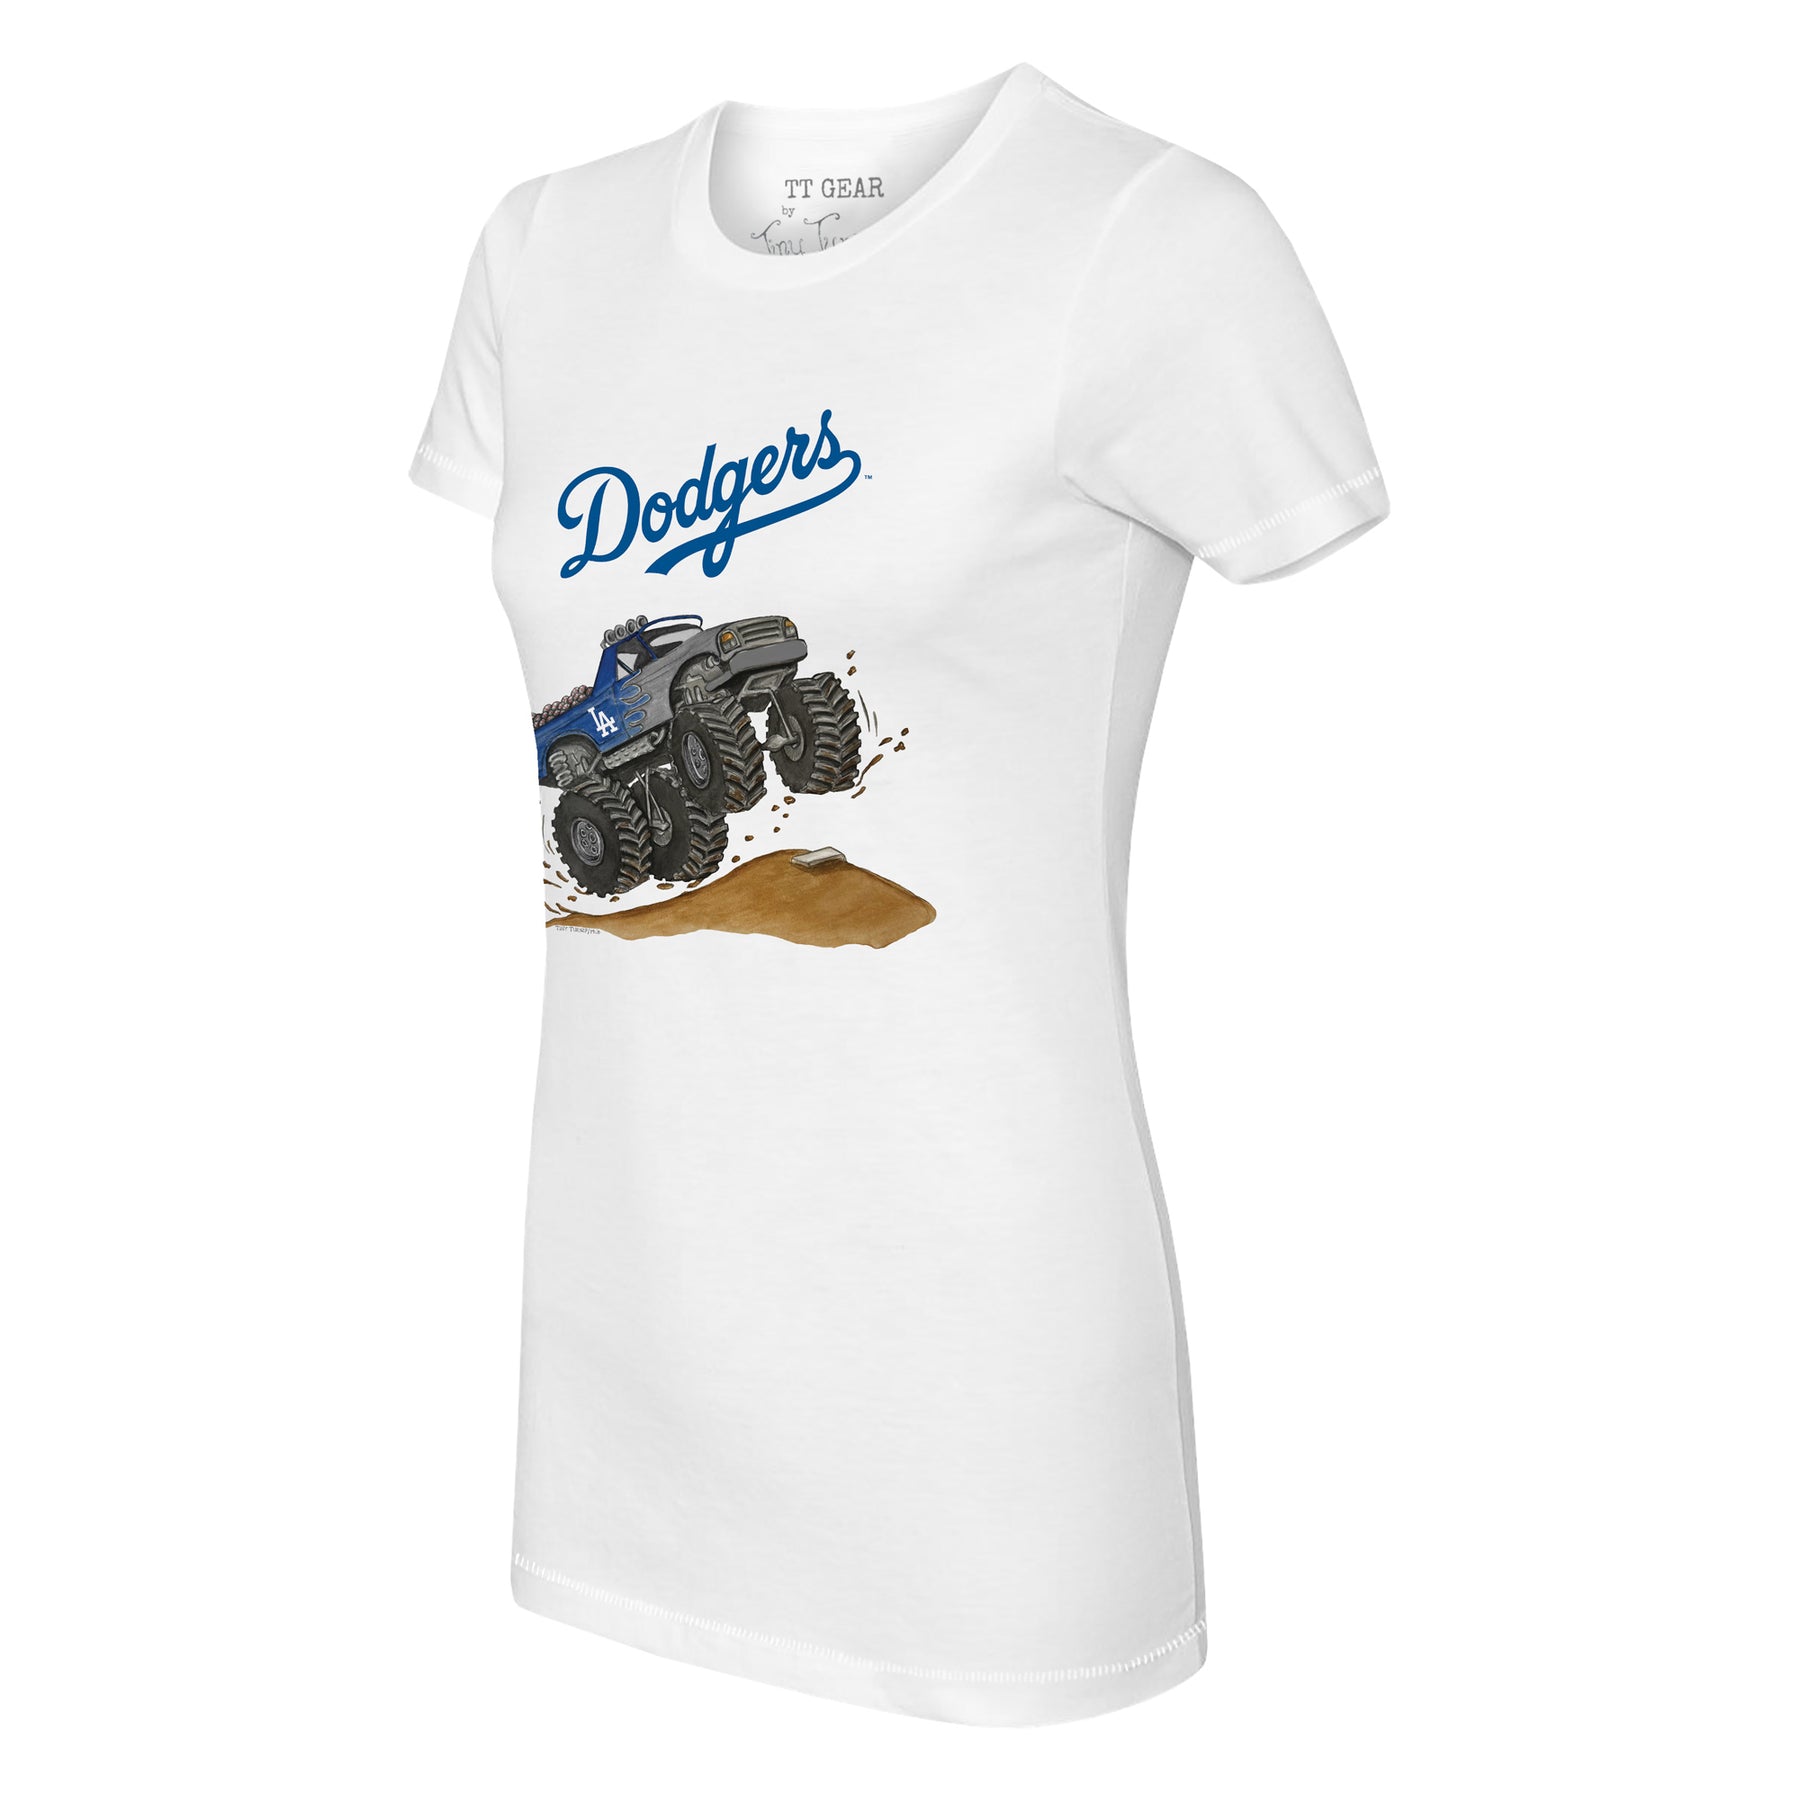 Los Angeles Dodgers Monster Truck Tee Shirt